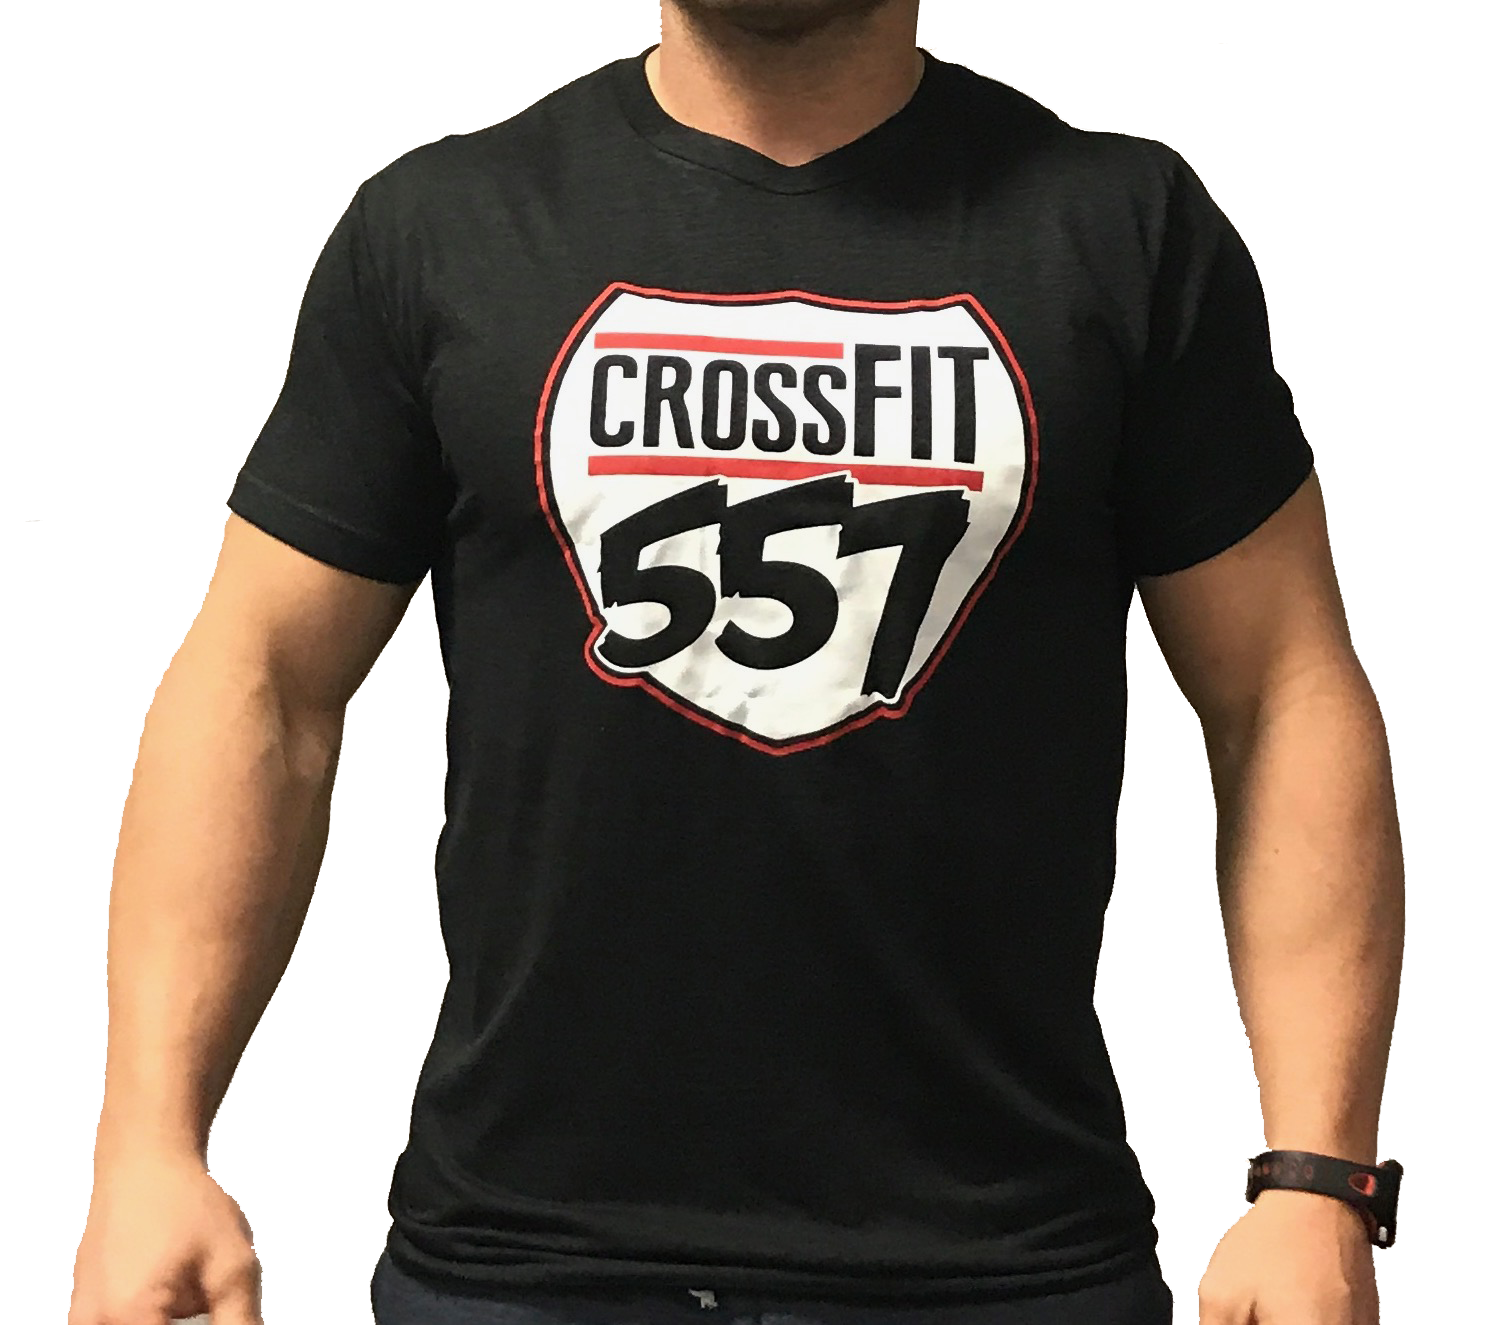 CrossFit 557 OG — Crossfit